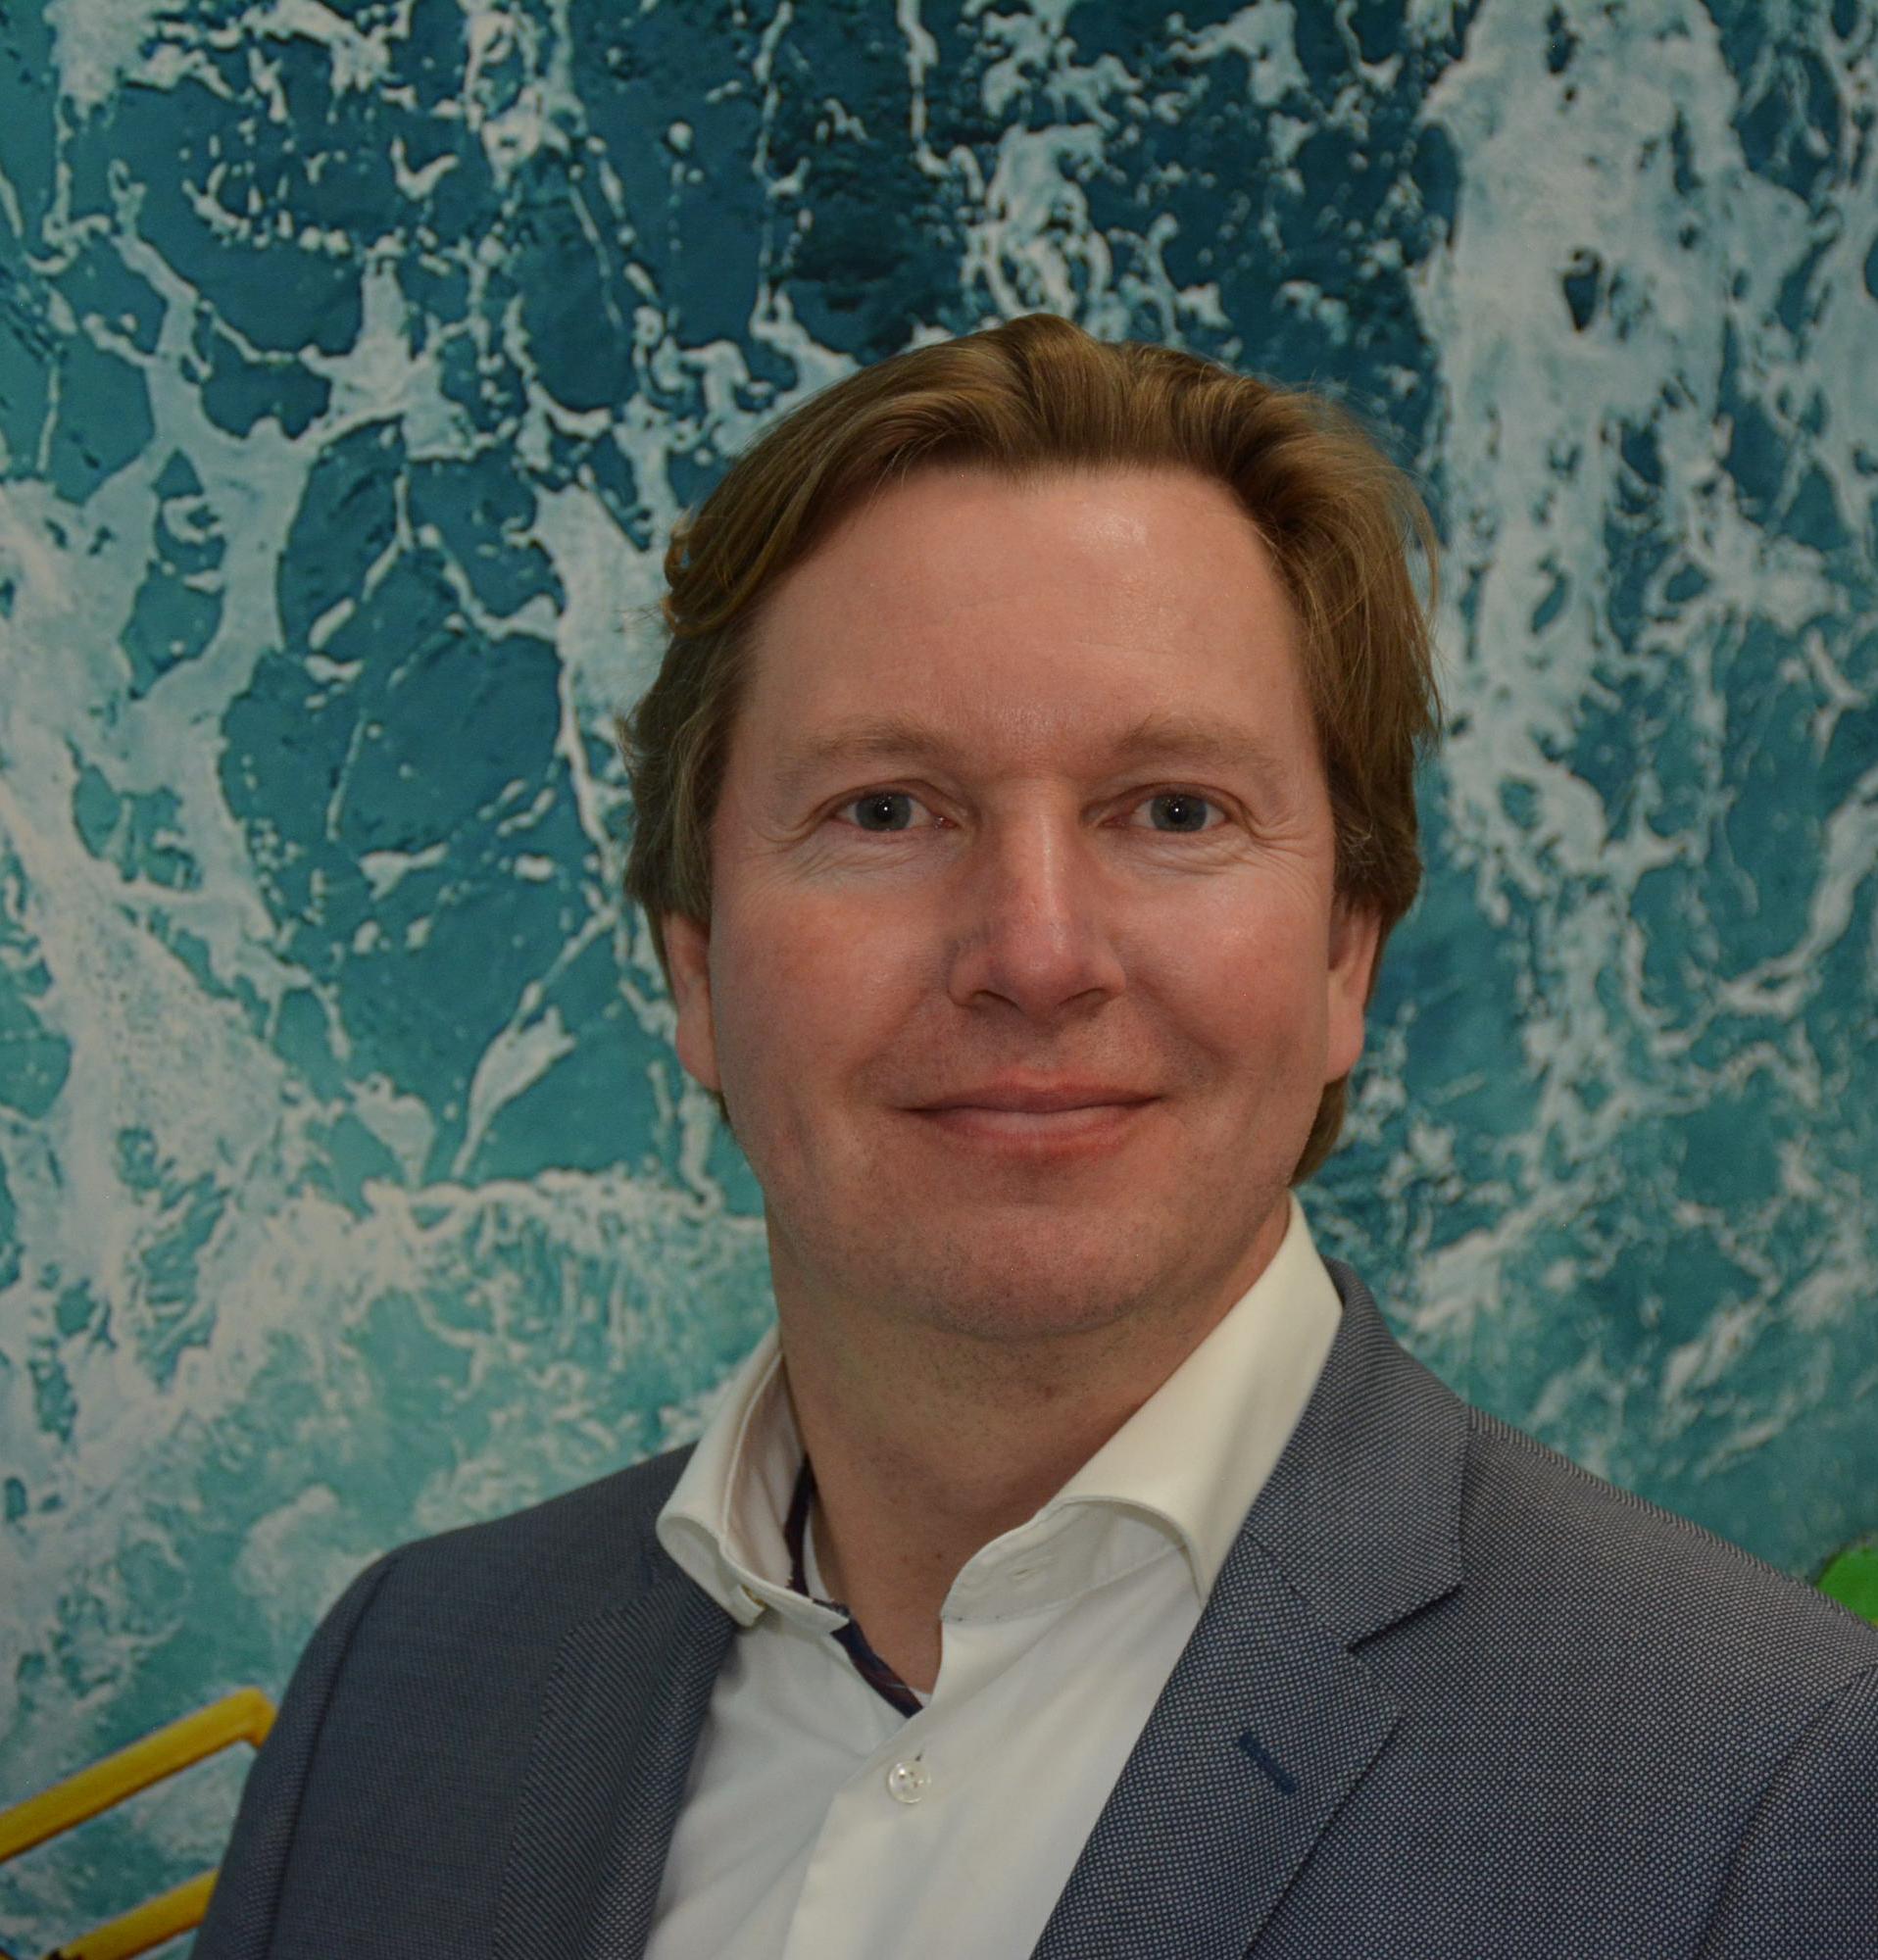 Contact Willem Buijs, CEO Hatenboer-Neptunus Holding